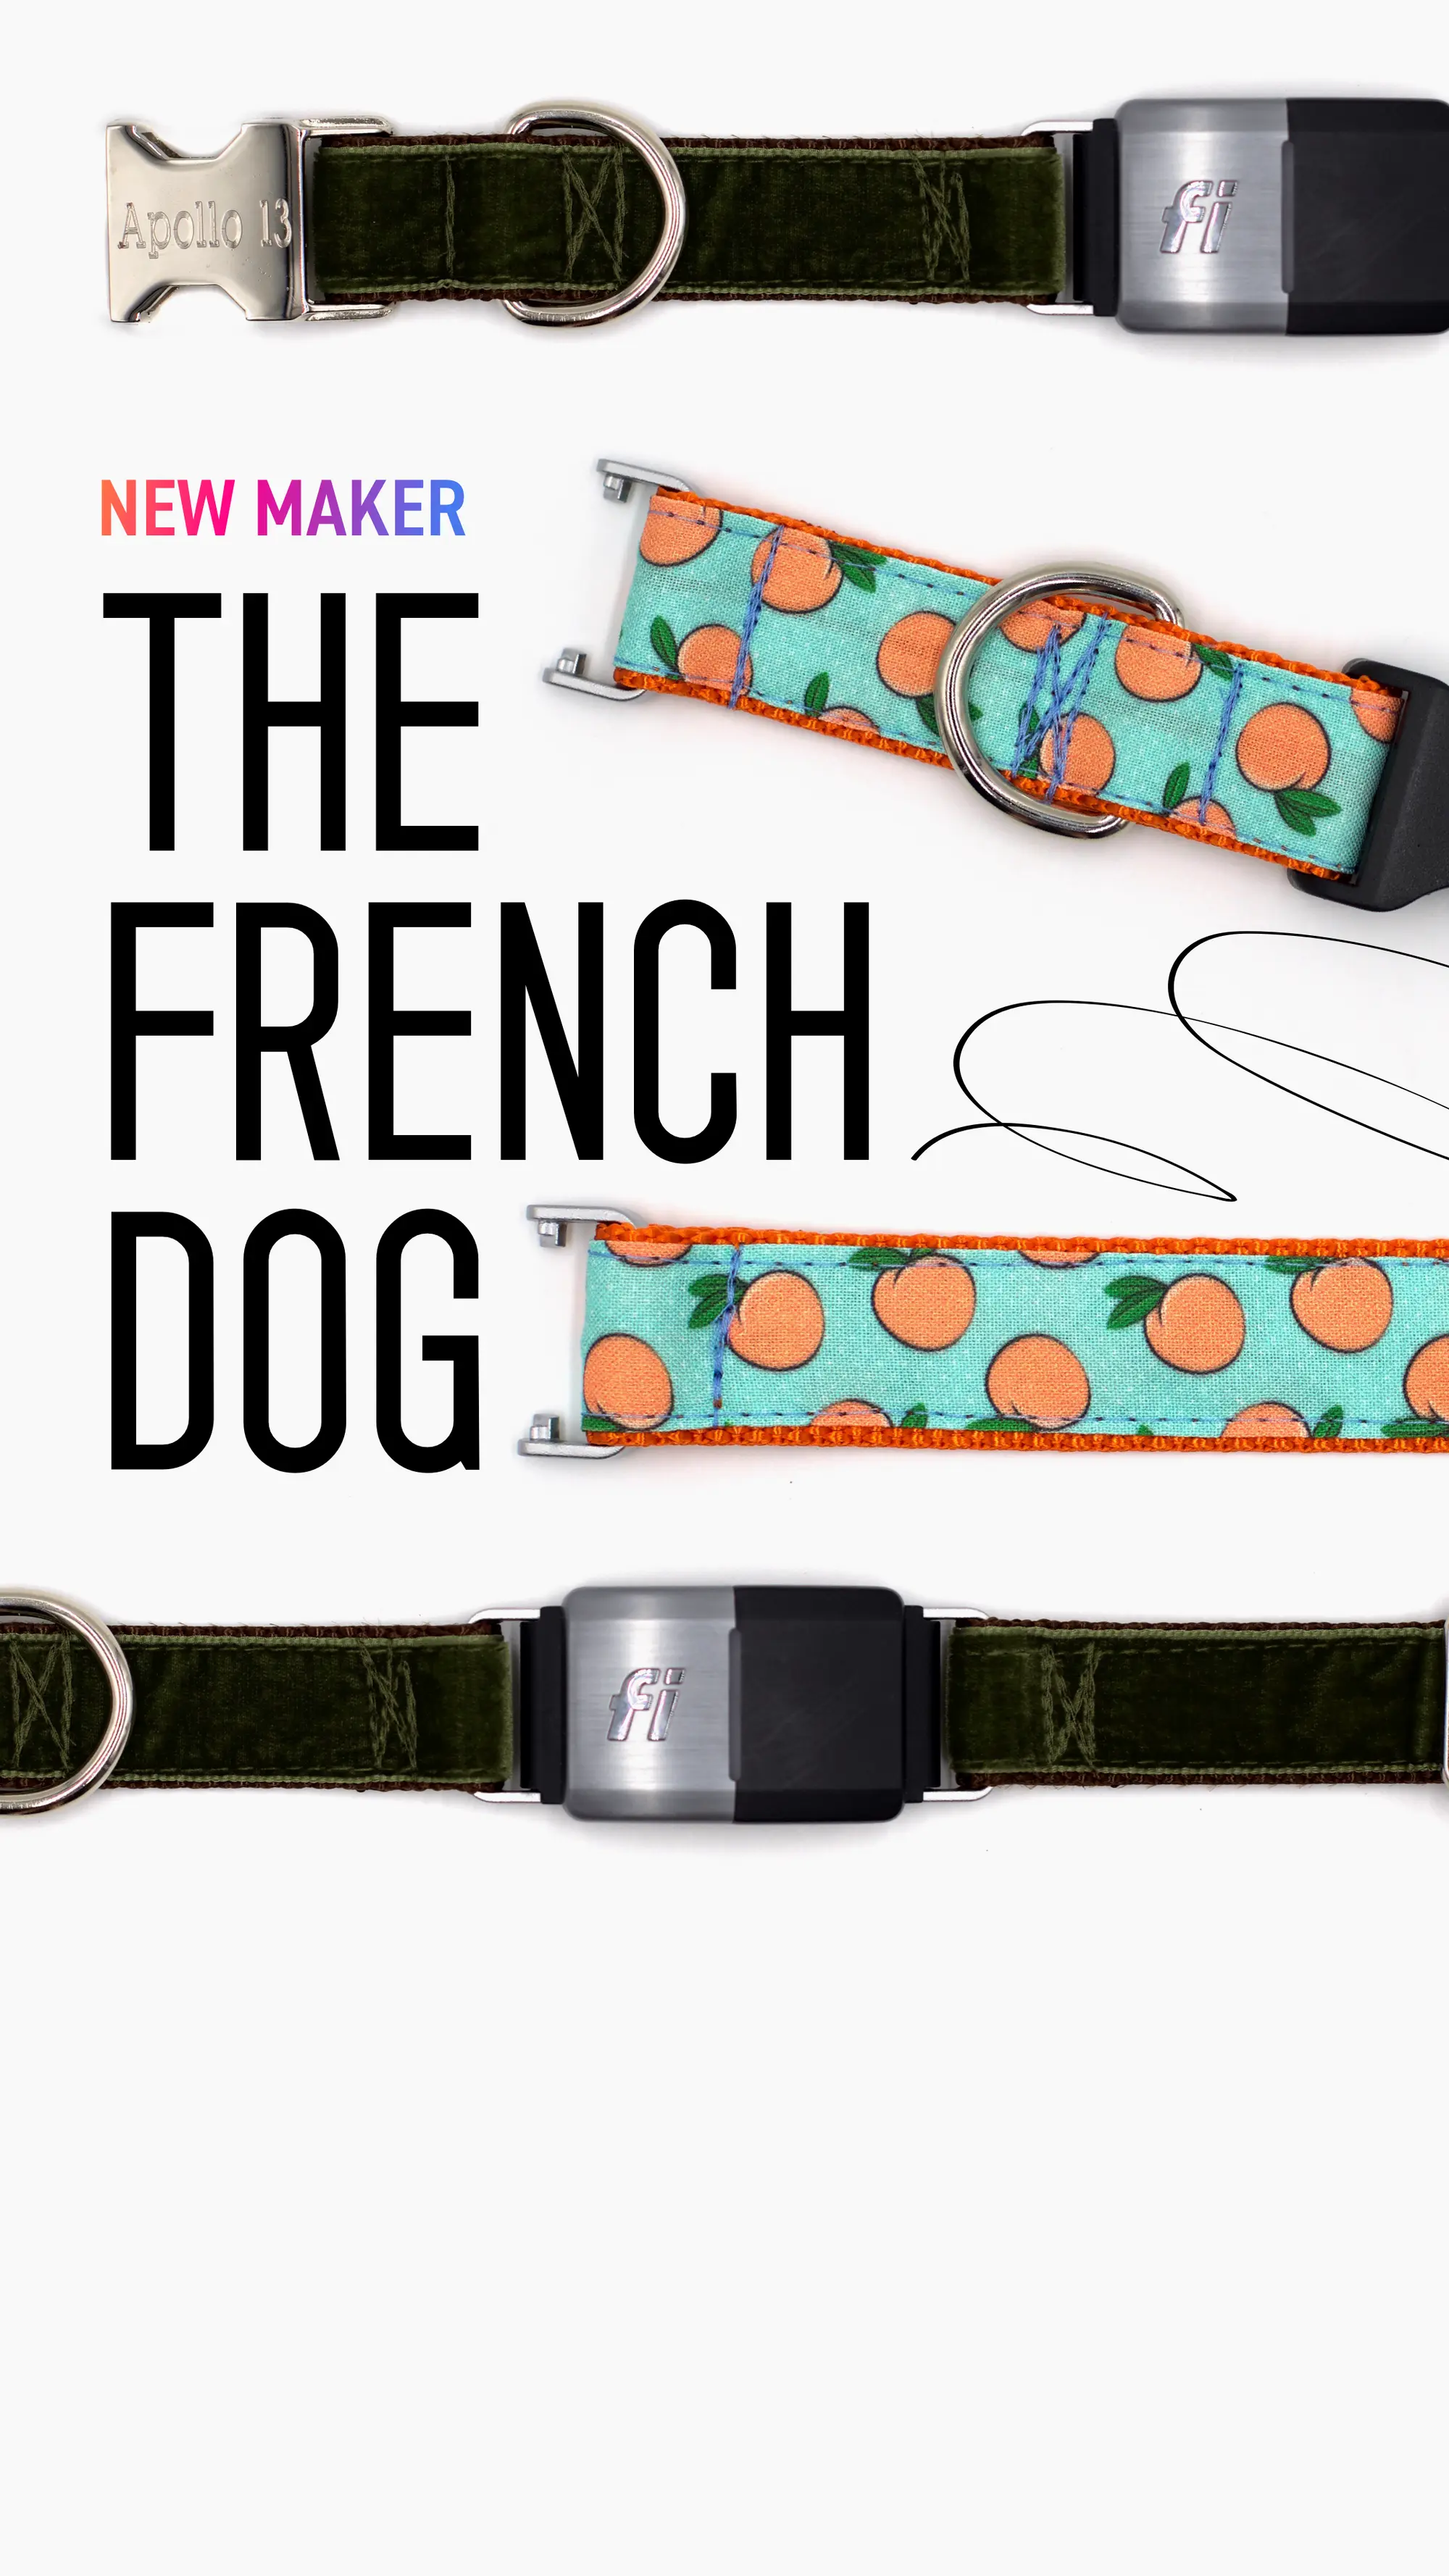 New Maker Alert: The French Dog